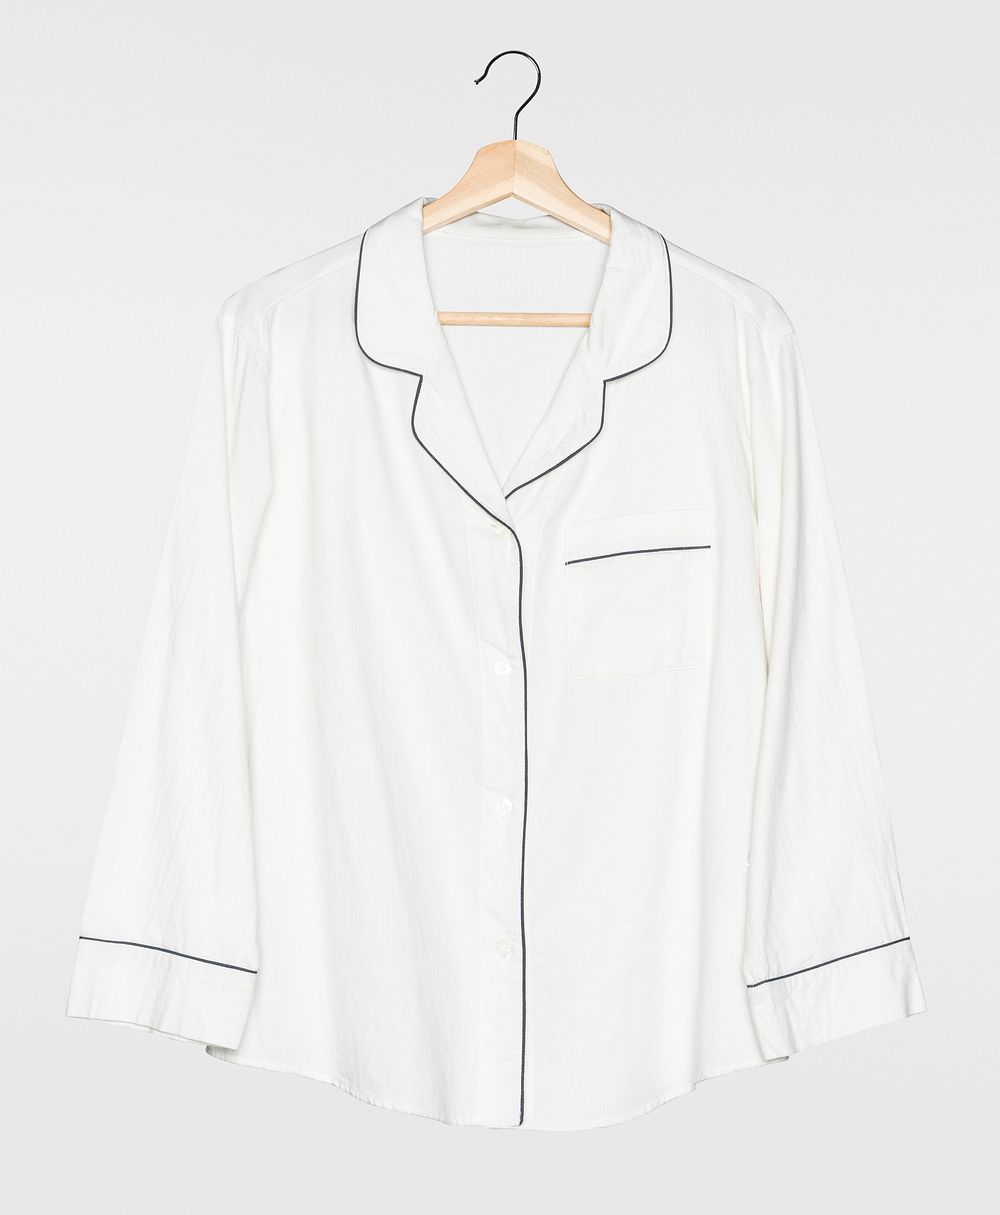 White pajama shirt front view simple nightwear apparel